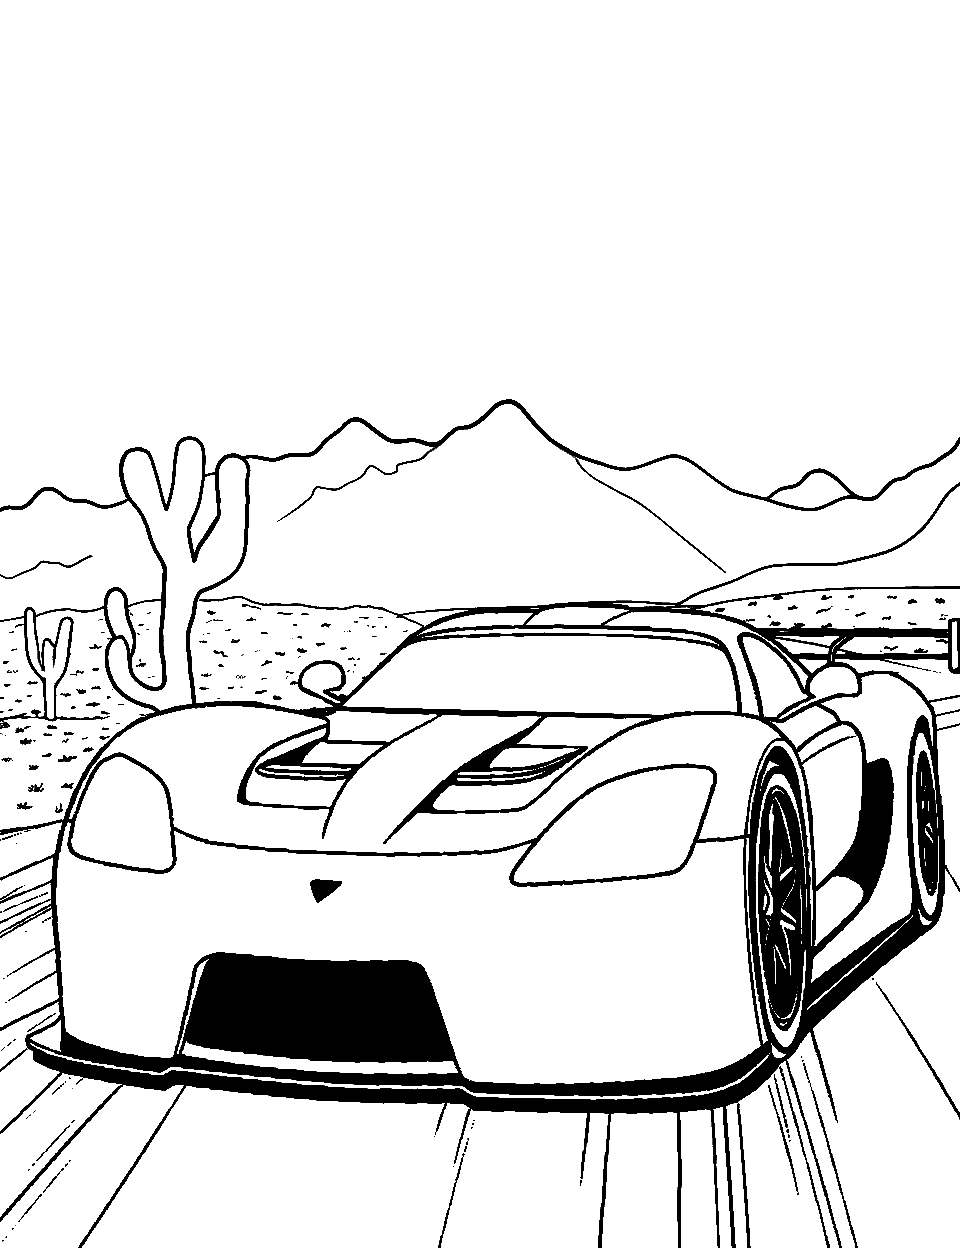 Desert Dash Race Car Coloring Page - A race car speeding through a desert landscape.